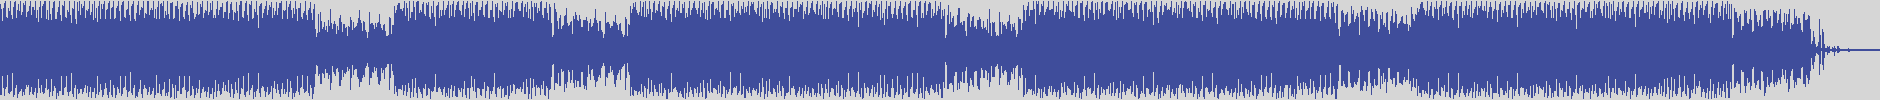 nf_boyz_records [NFY076] Dazed Kiss - Mushroom [Tech Mix] audio wave form